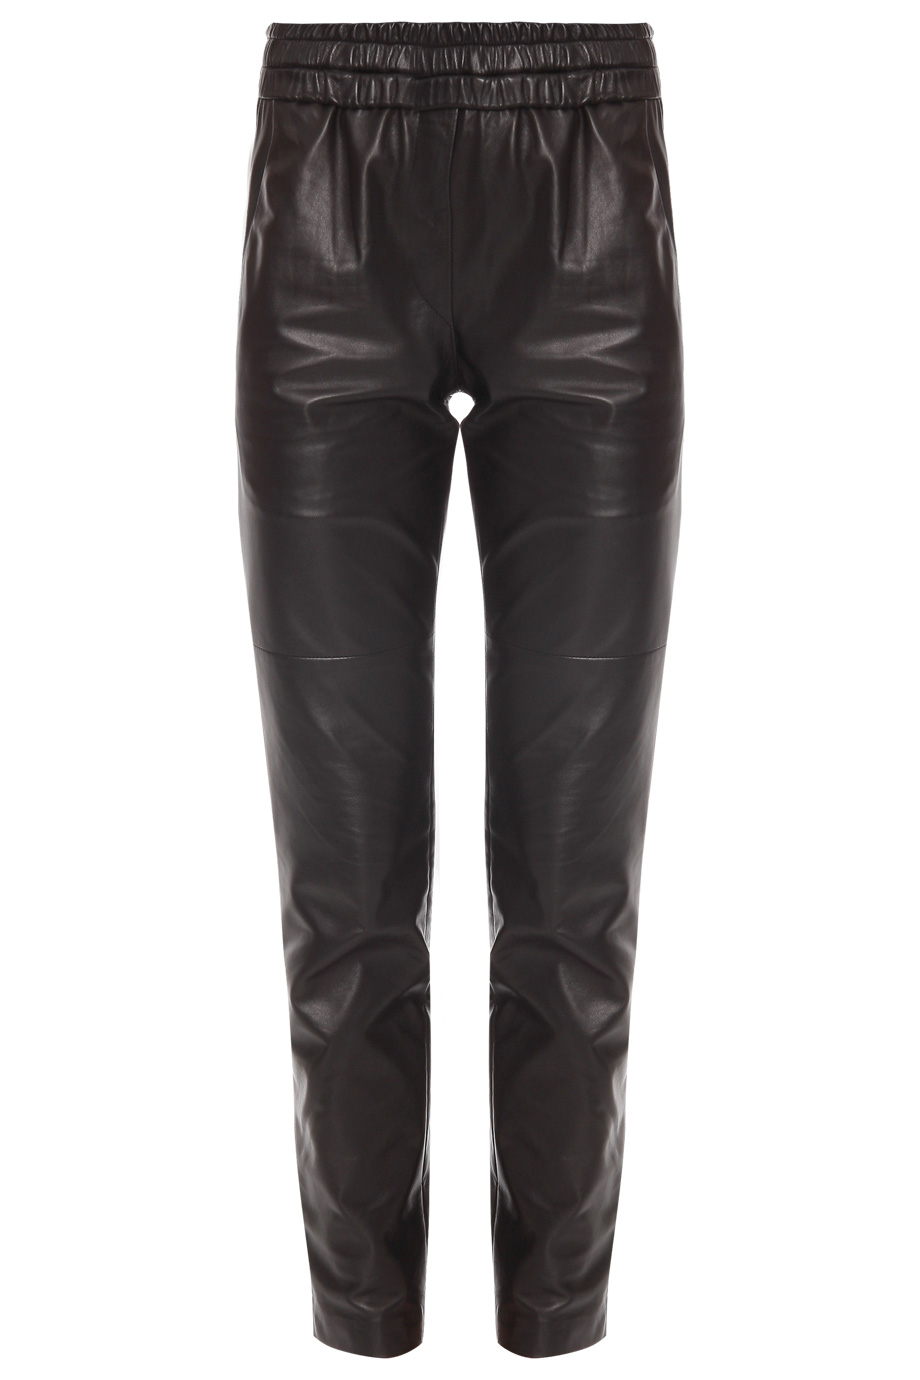 Lyst - Isabel Marant Leather Jogging Pant in Black